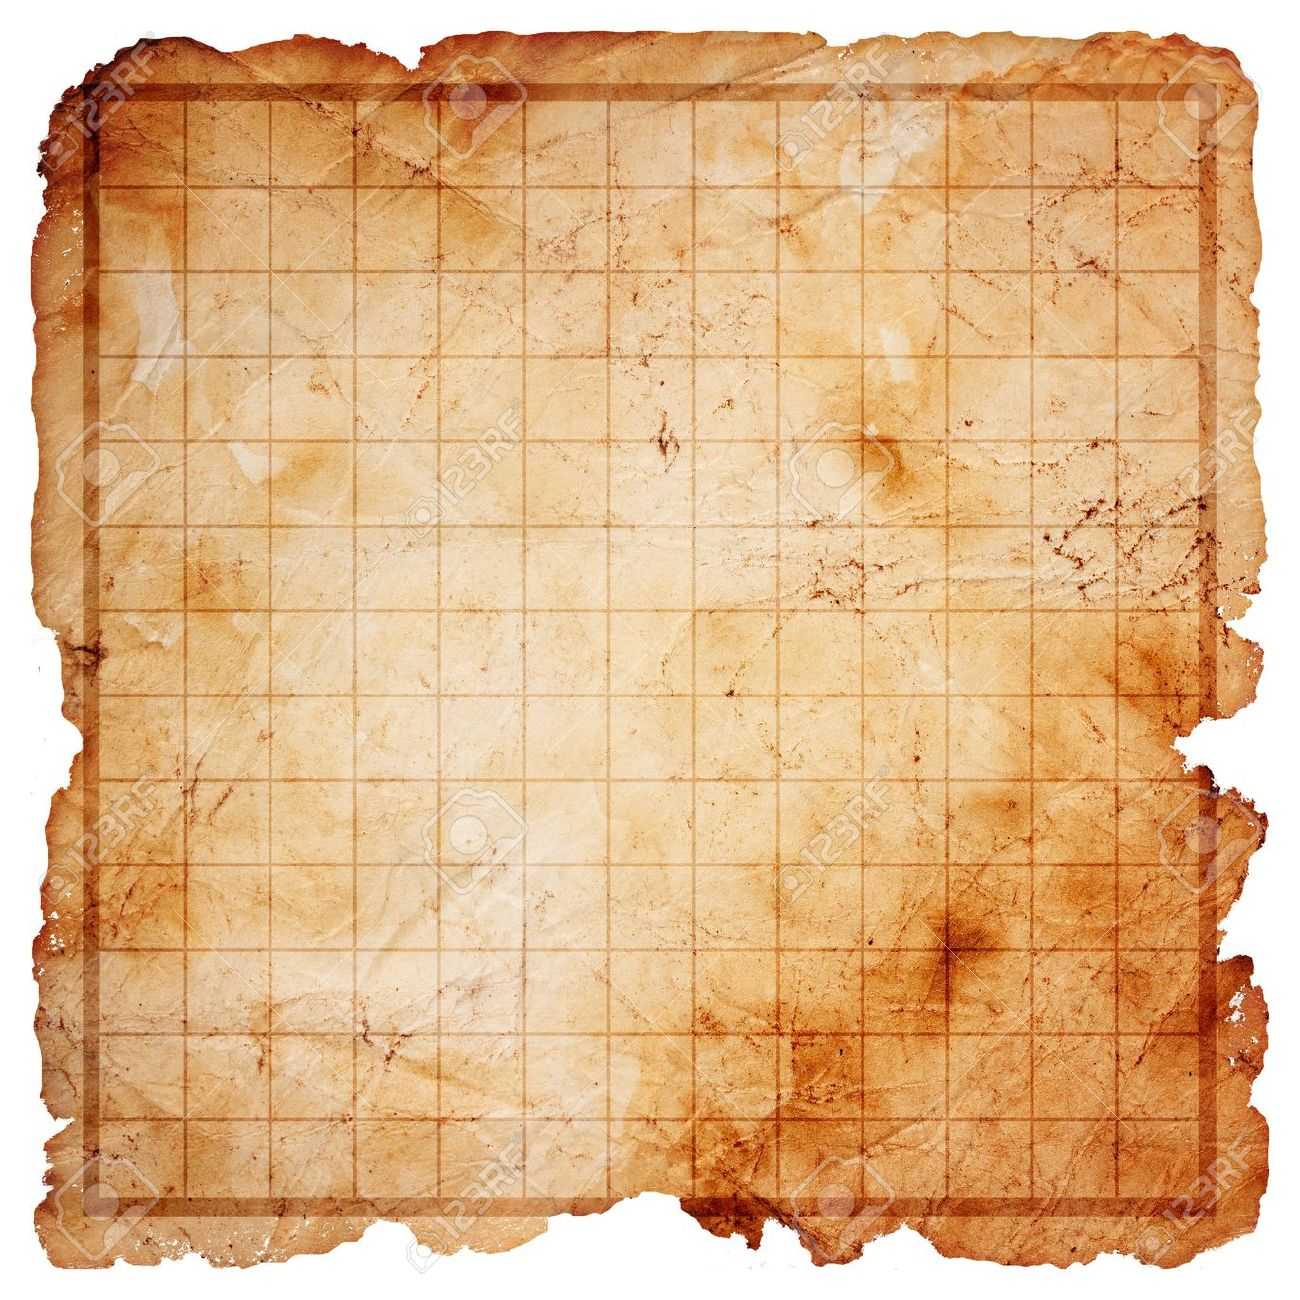 Blank Pirate Treasure Map Regarding Blank Pirate Map In Blank Pirate Map Template